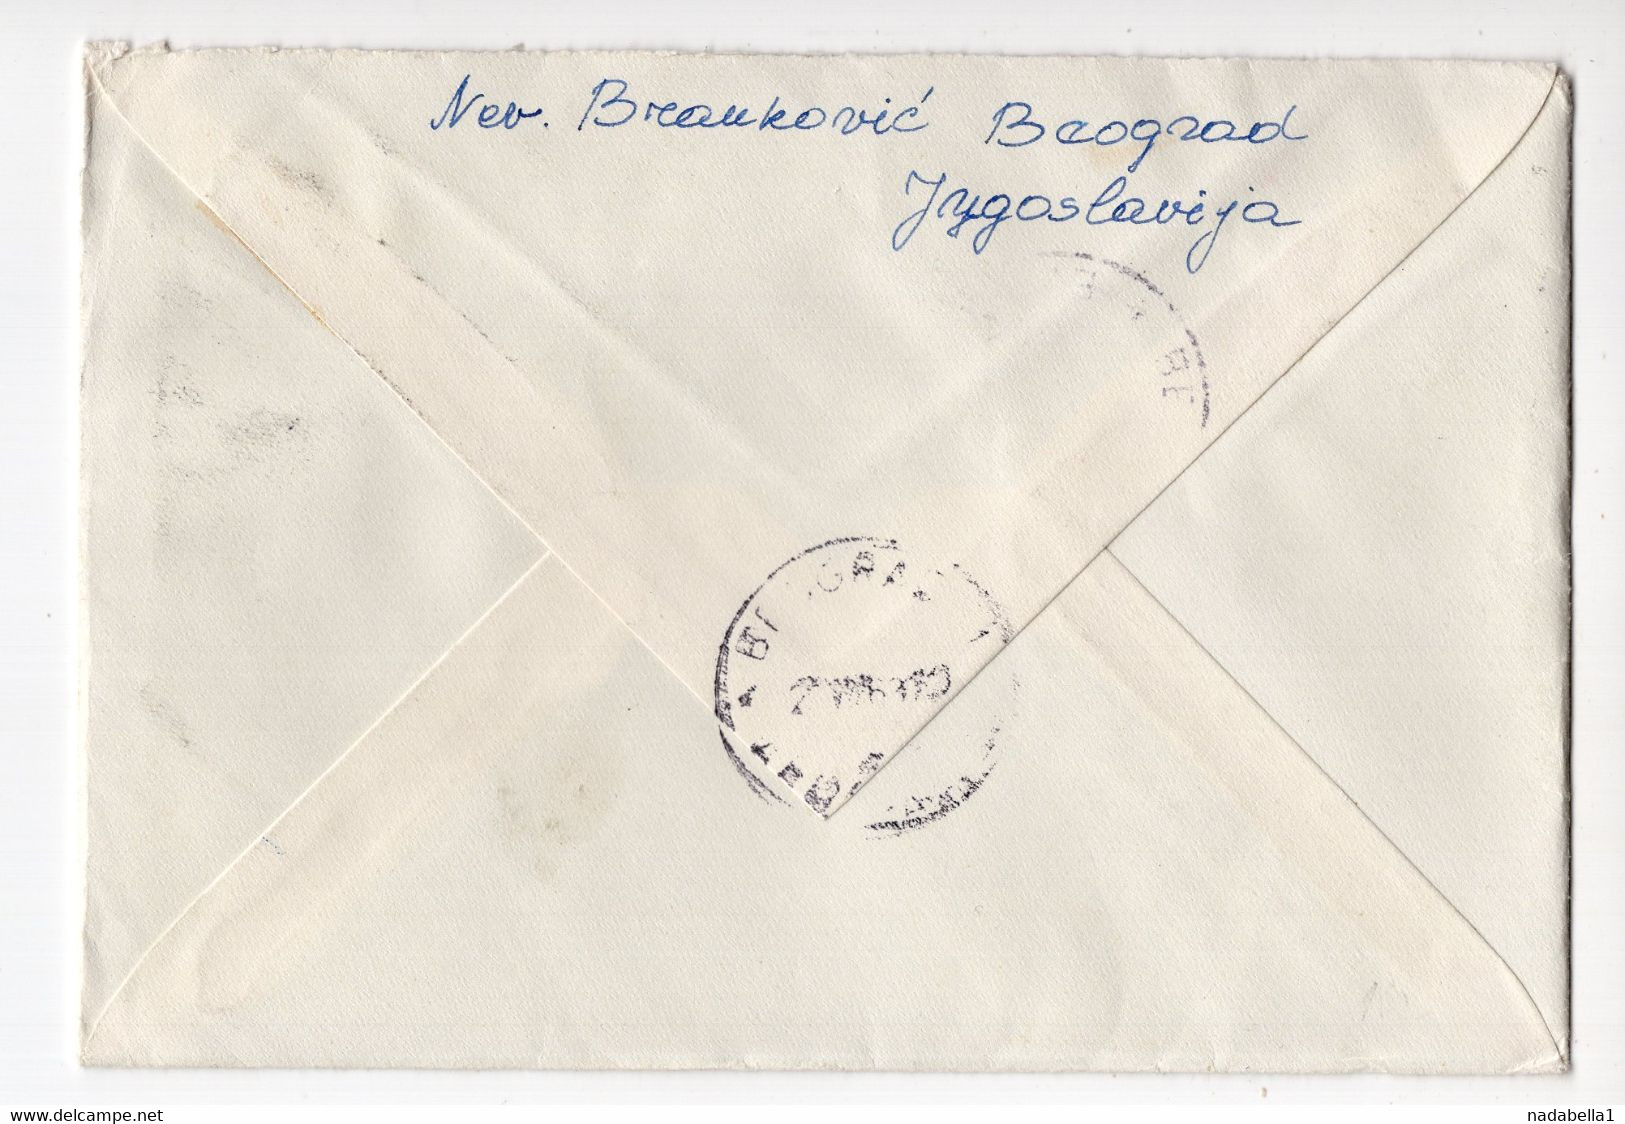 1965. YUGOSLAVIA,SERBIA,BELGRADE,AIRMAIL,REGISTERED COVER TO SWITZERLAND - Luchtpost